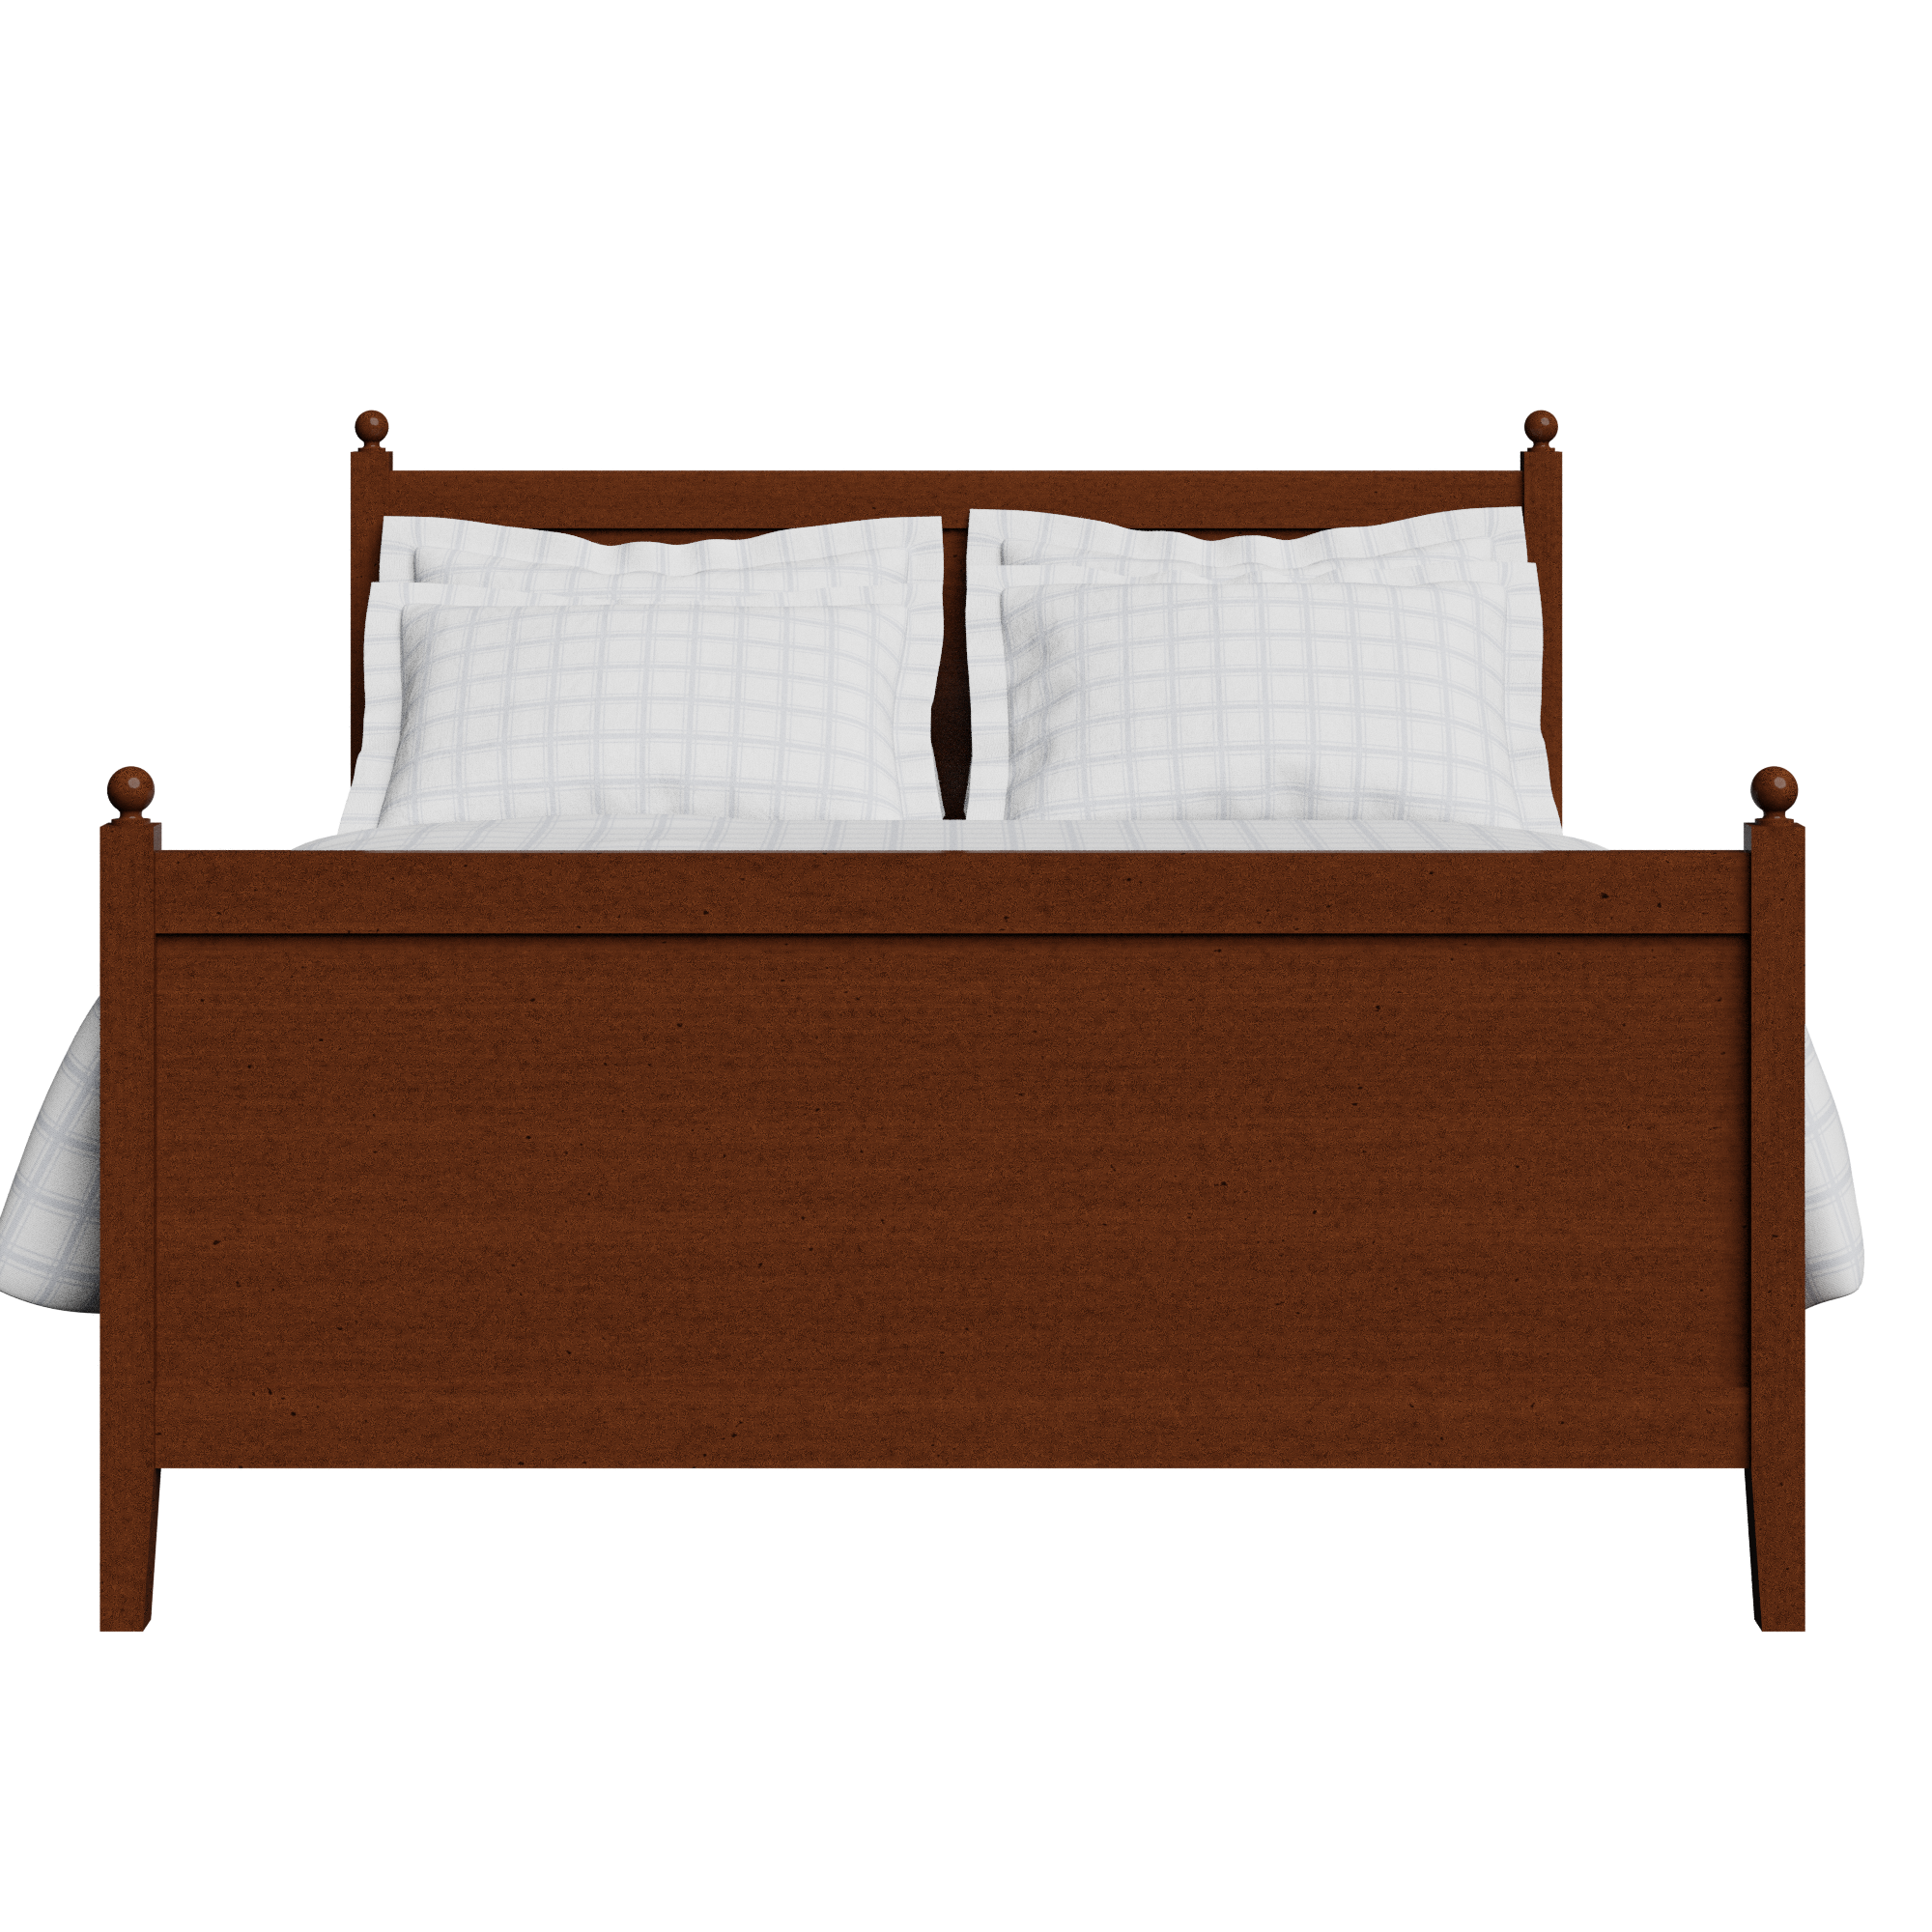 Marbella wood bed in dark cherry